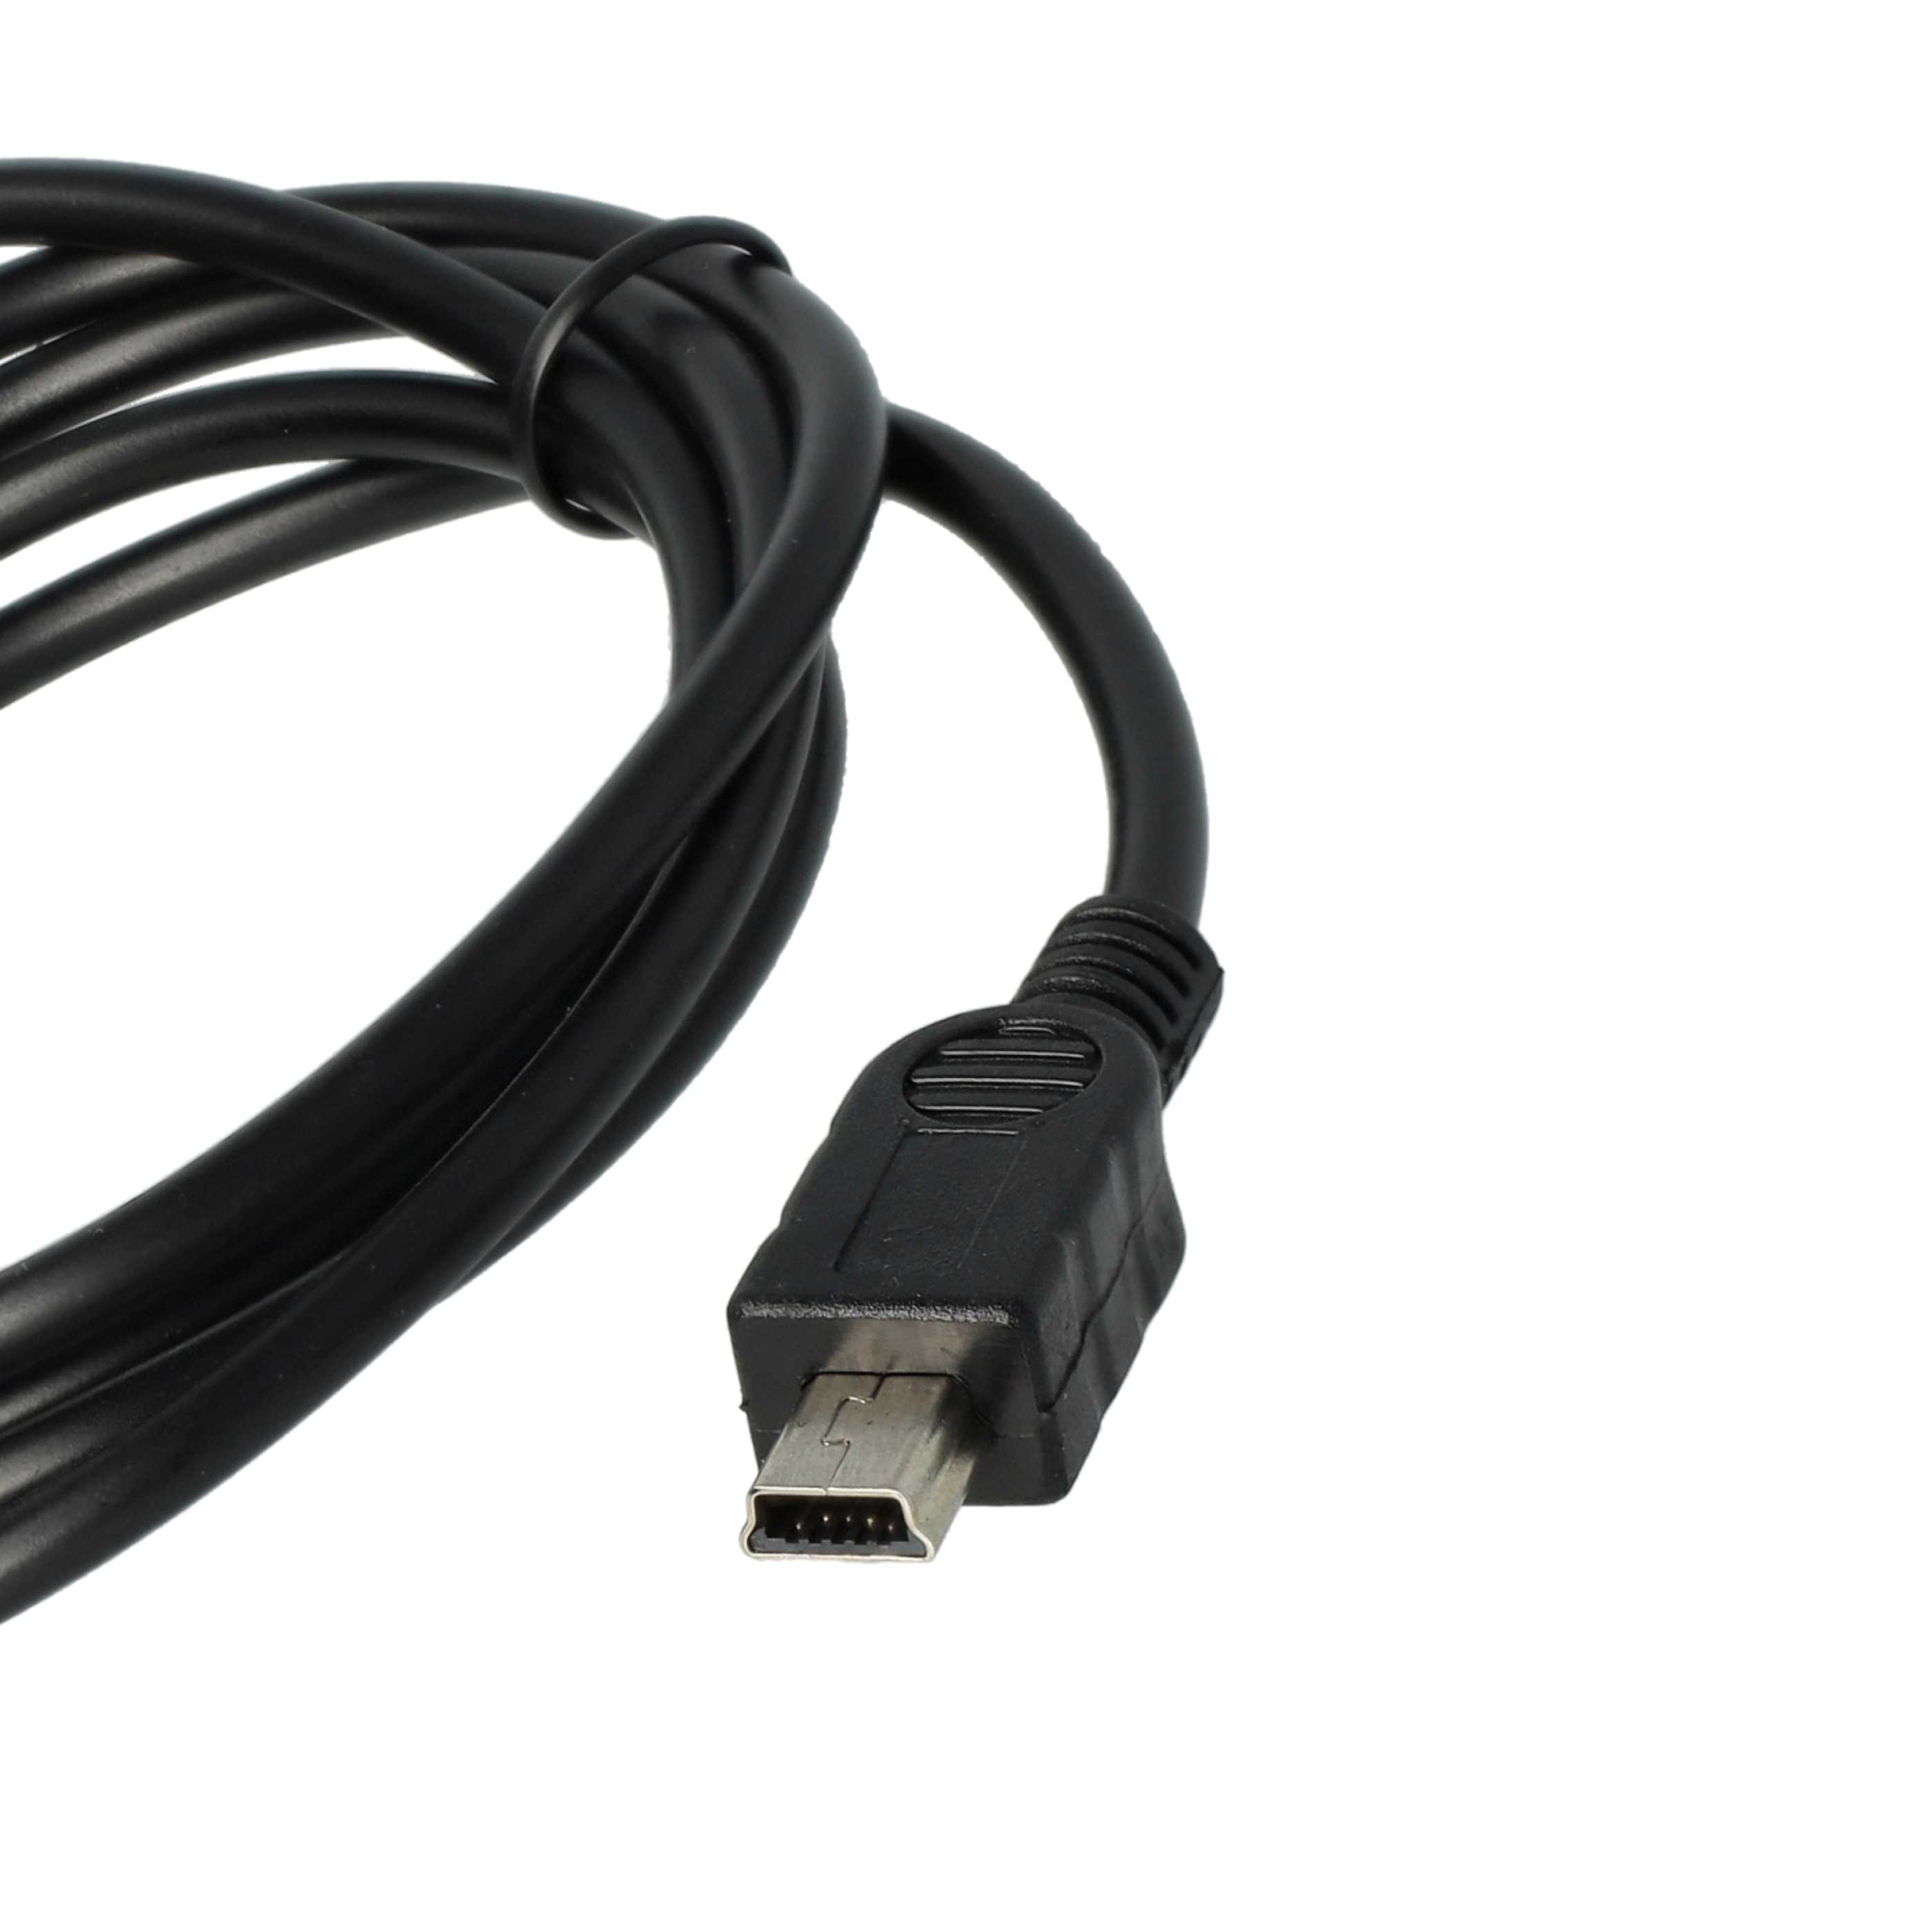 USB Data Cable replaces Nikon UC-E15, UC-E3, UC-E4, UC-E5 for Cect Camera etc. - 100 cm